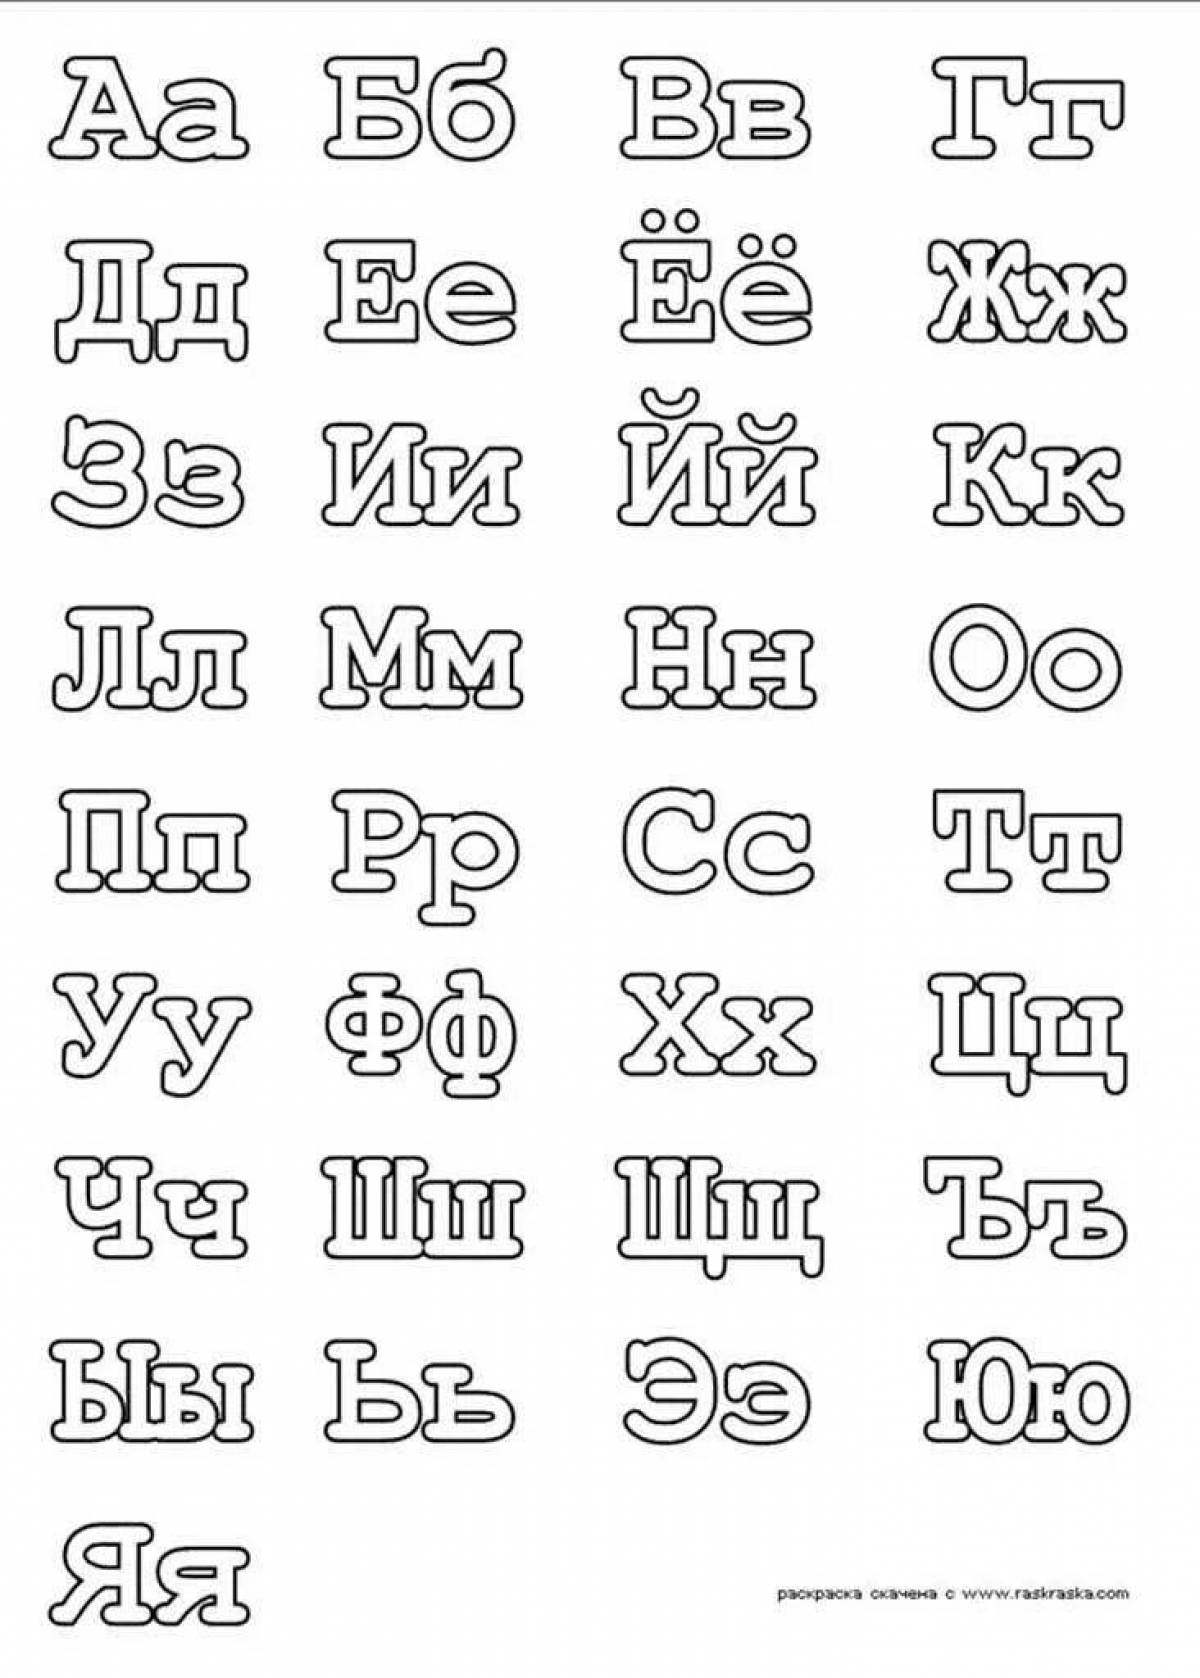 Russian alphabet #4